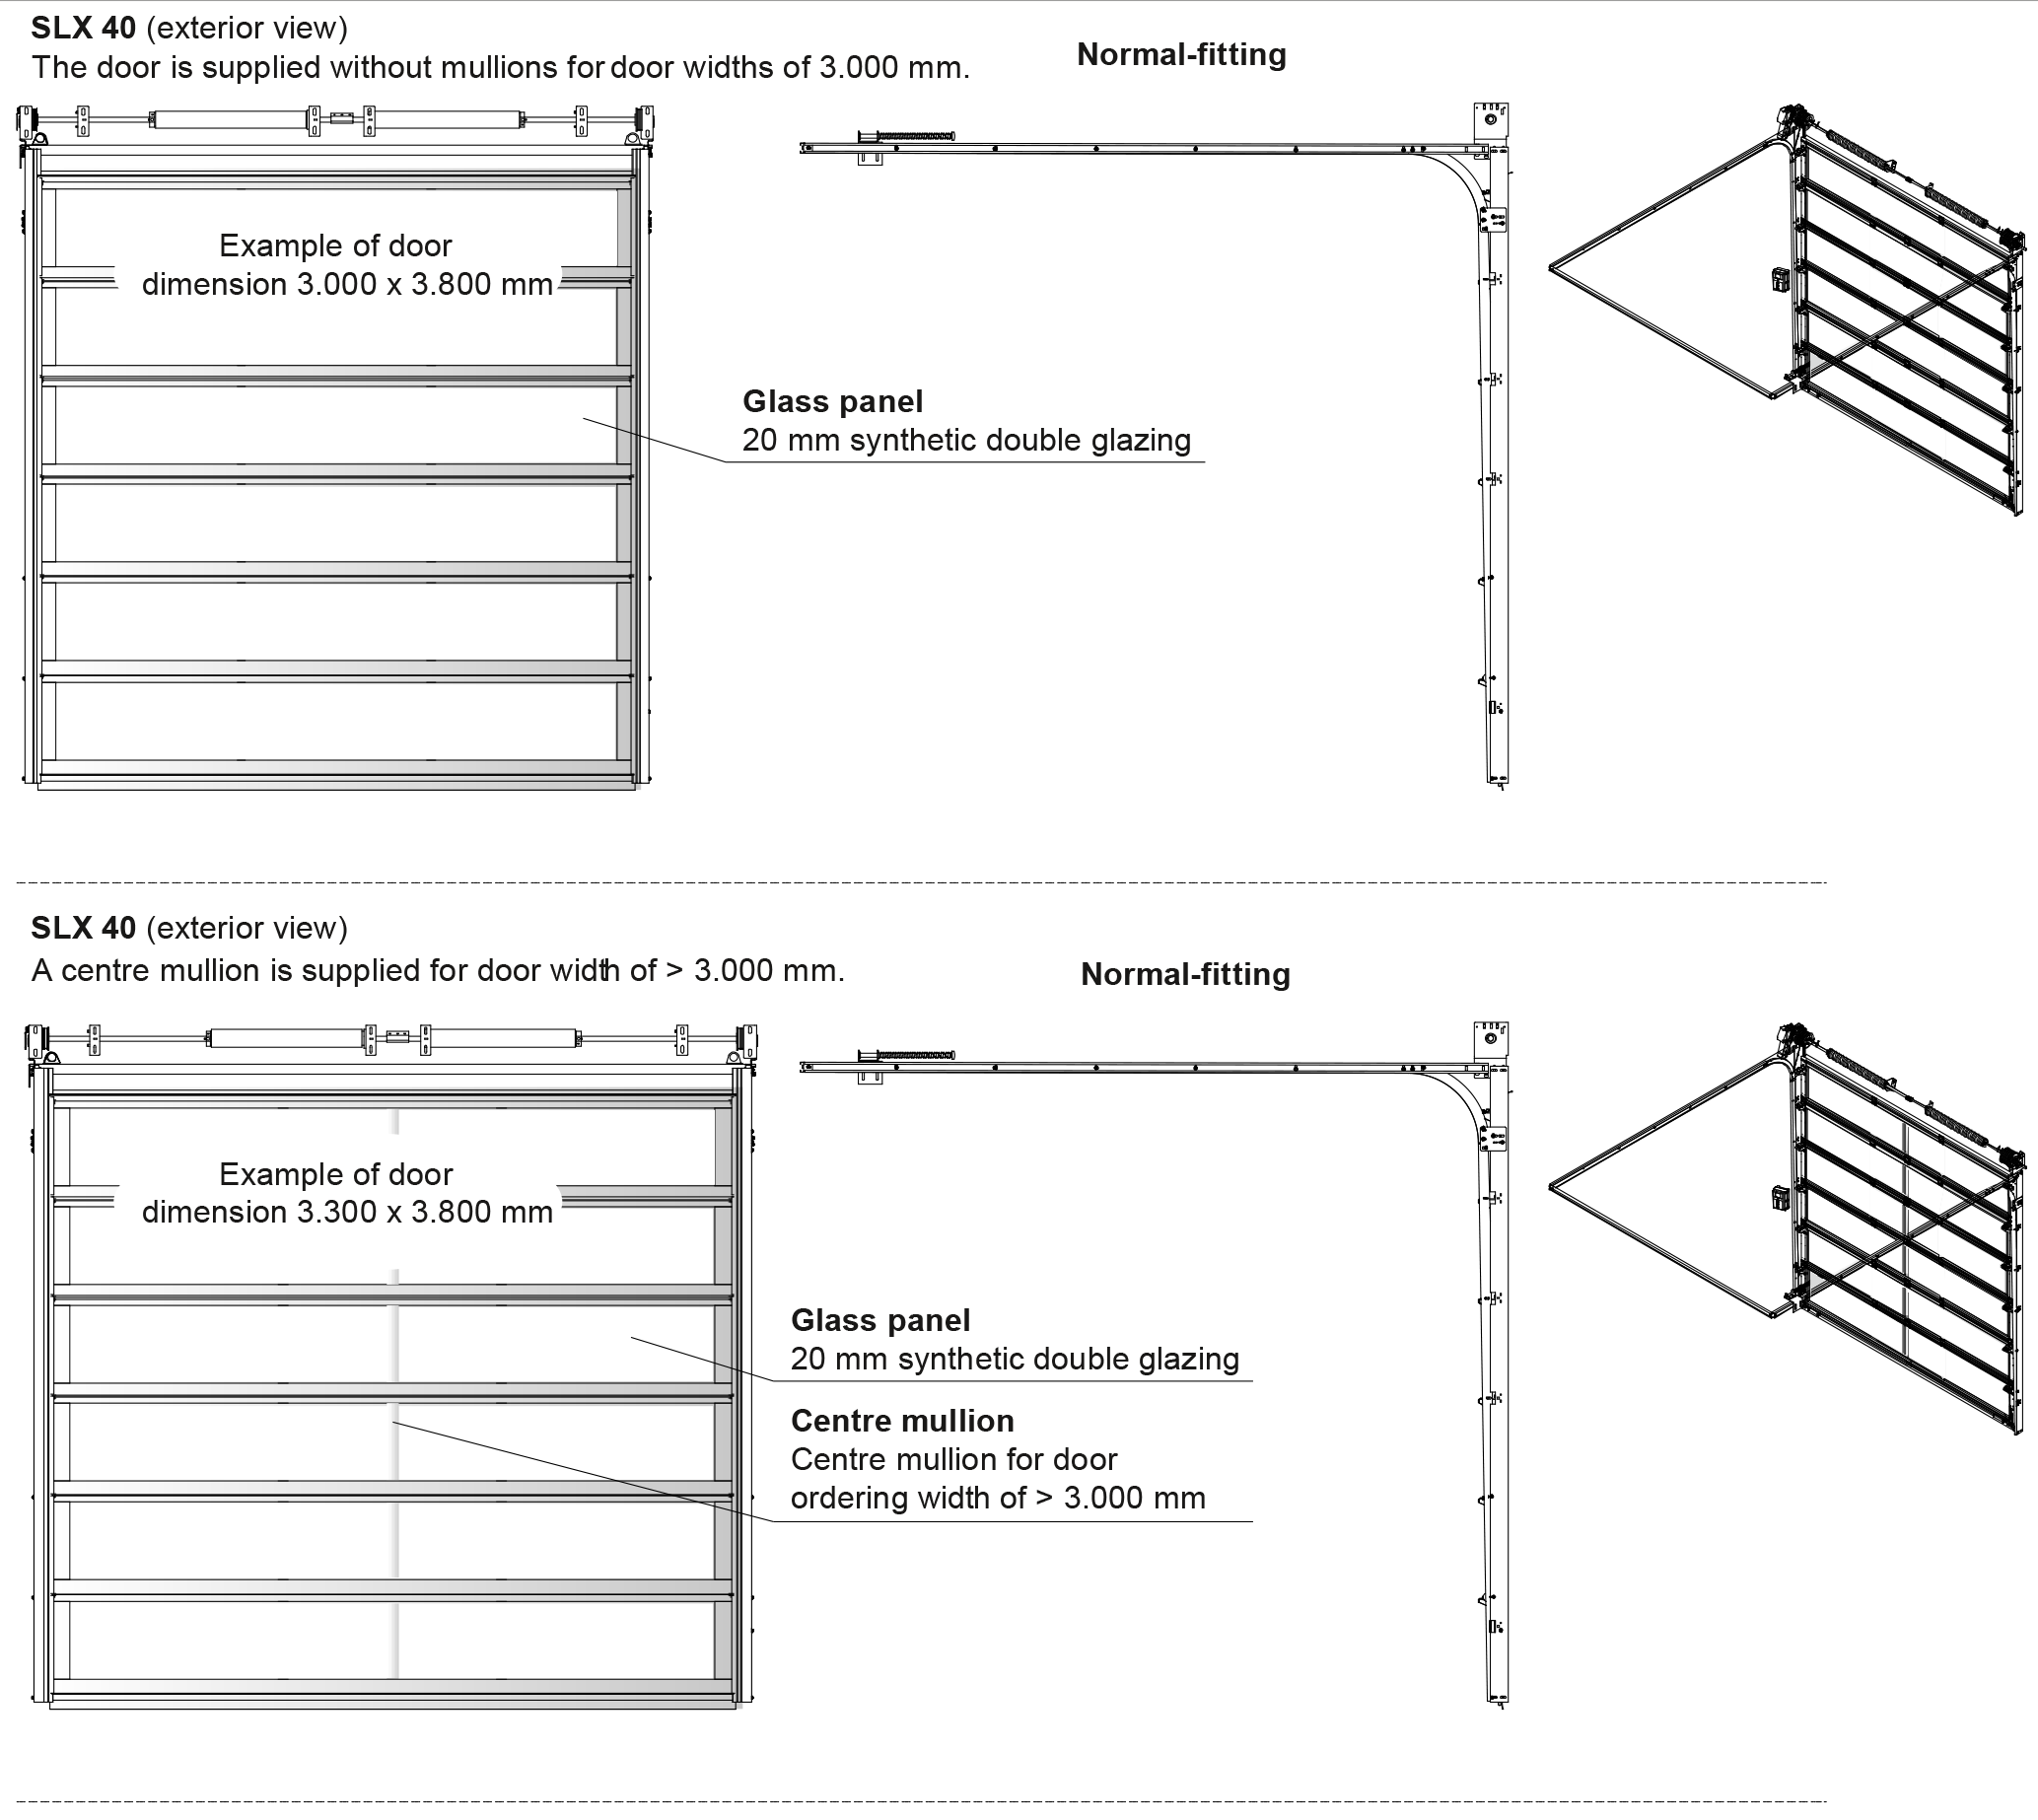 Sectional door glazing options for Teckentrup SLX 40